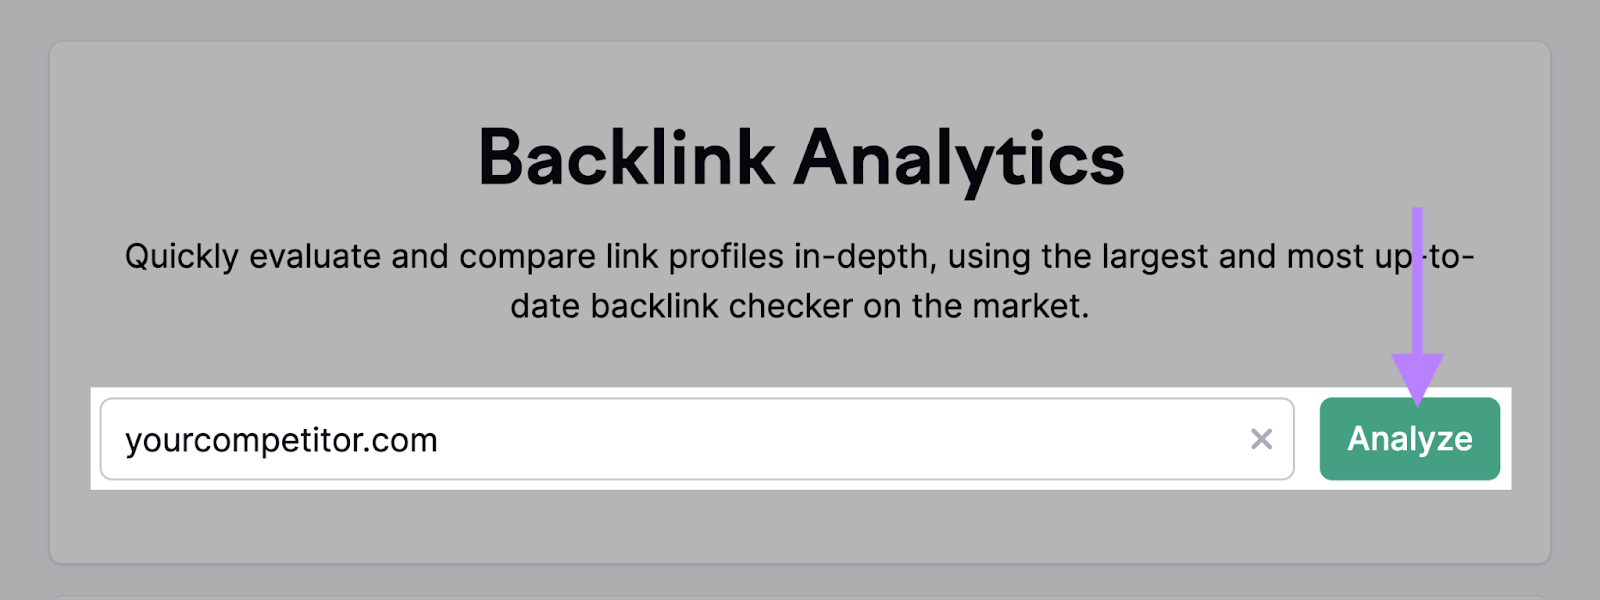 Backlink Analytics tool